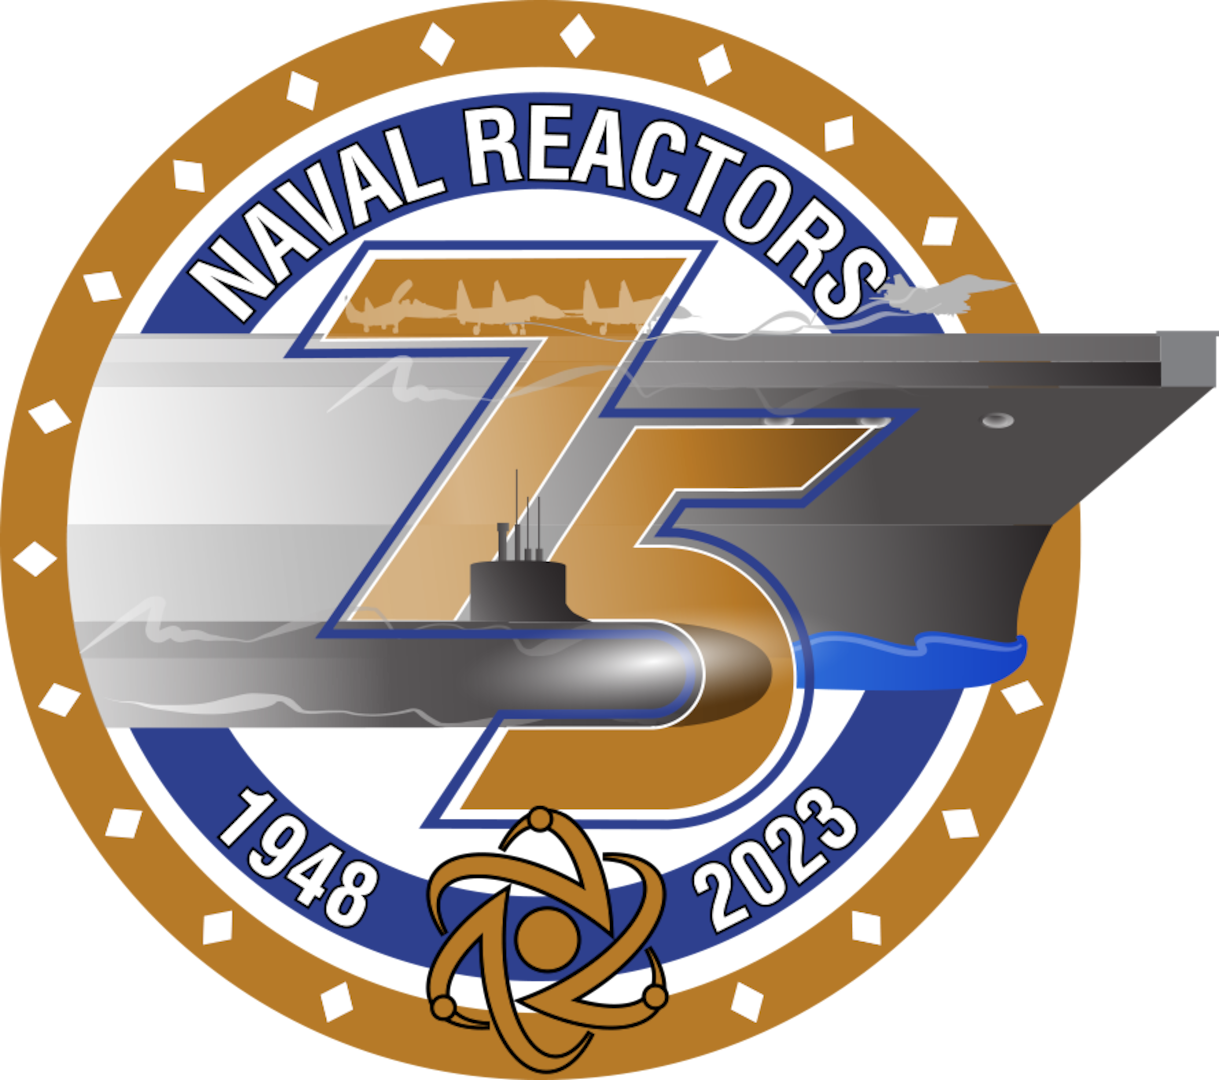 Naval Reactors 75th Anniversary logo